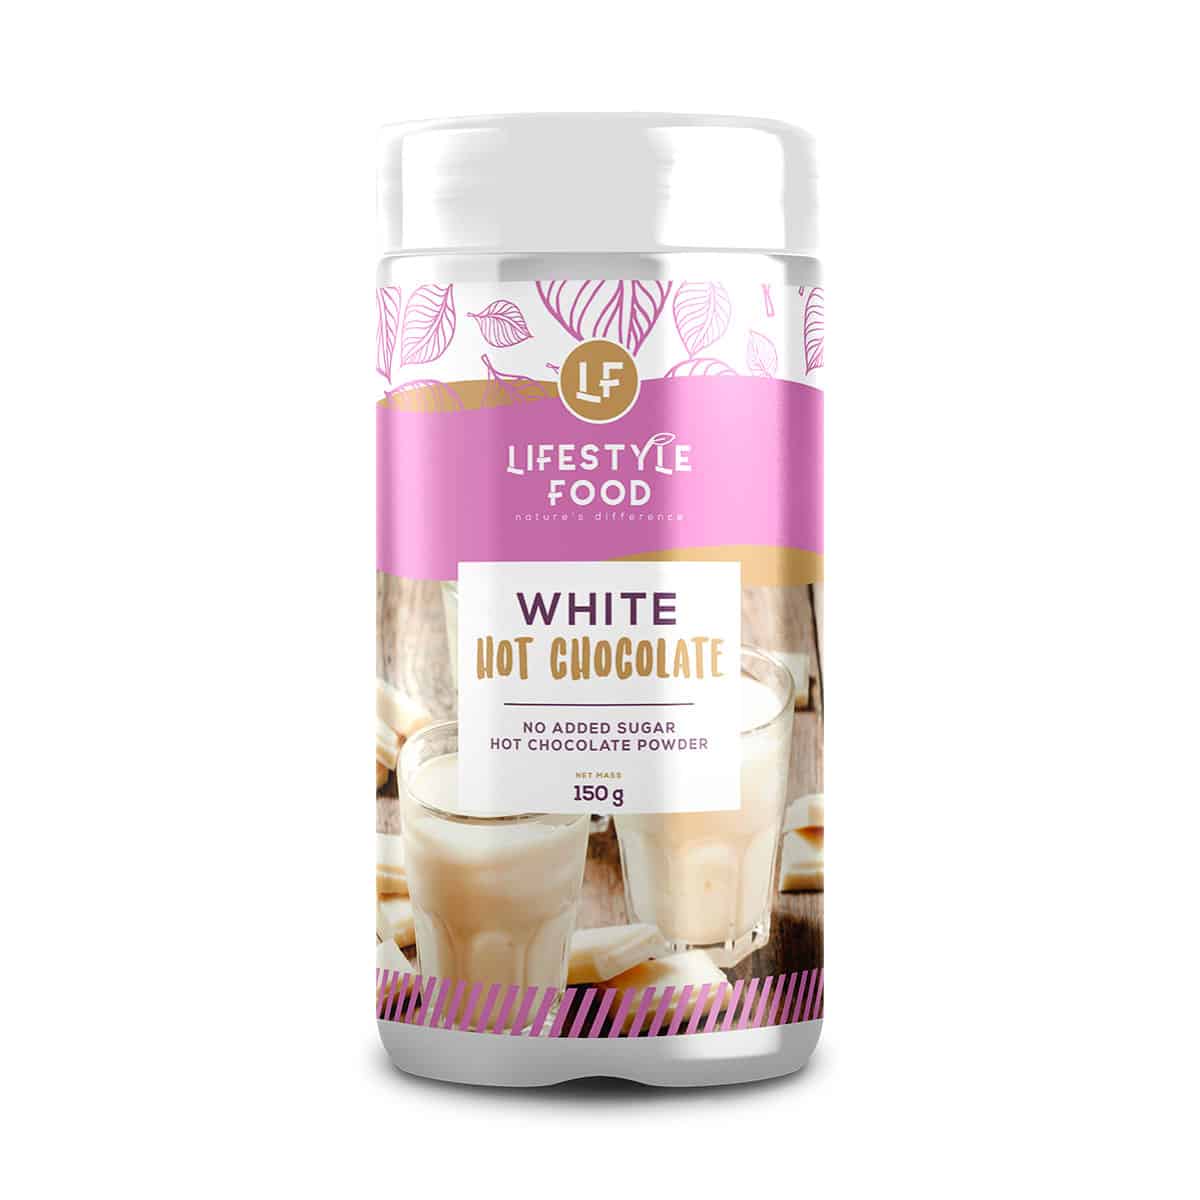 Lifestyle Food White Hot Chocolate Powder - 150g